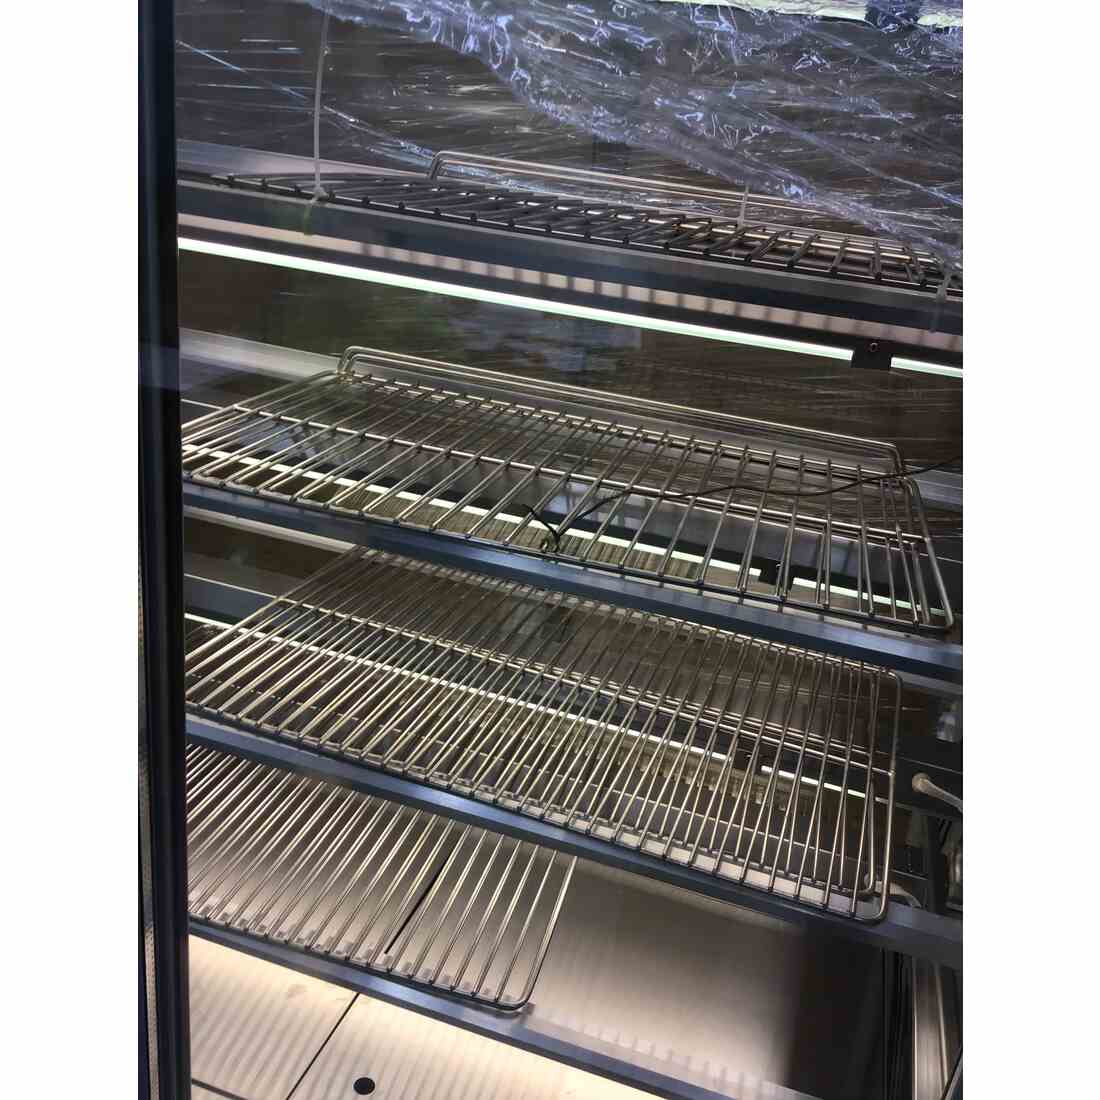 2NDs: Bonvue Heated Food Display H-SL840V-NSW1366